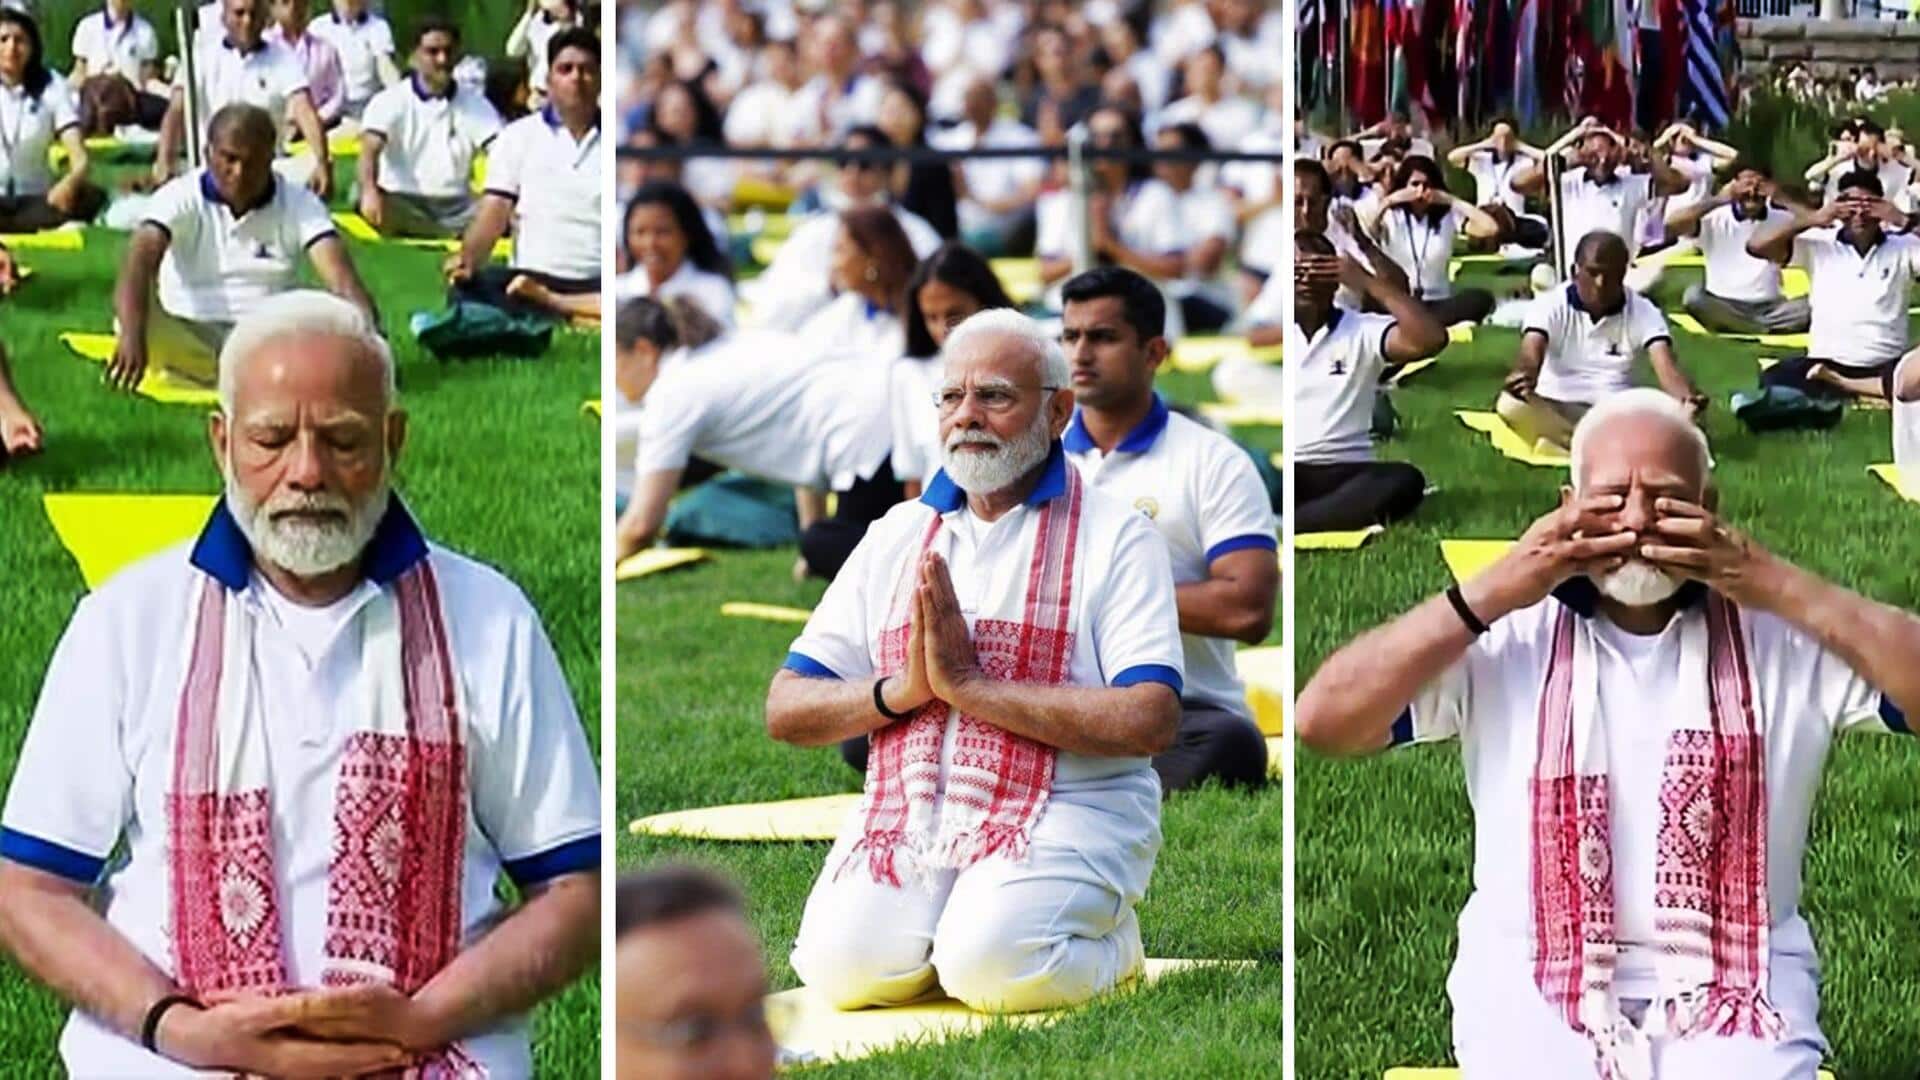 PM Modi's 'yoga economy' message in 'land of sadhana' Srinagar